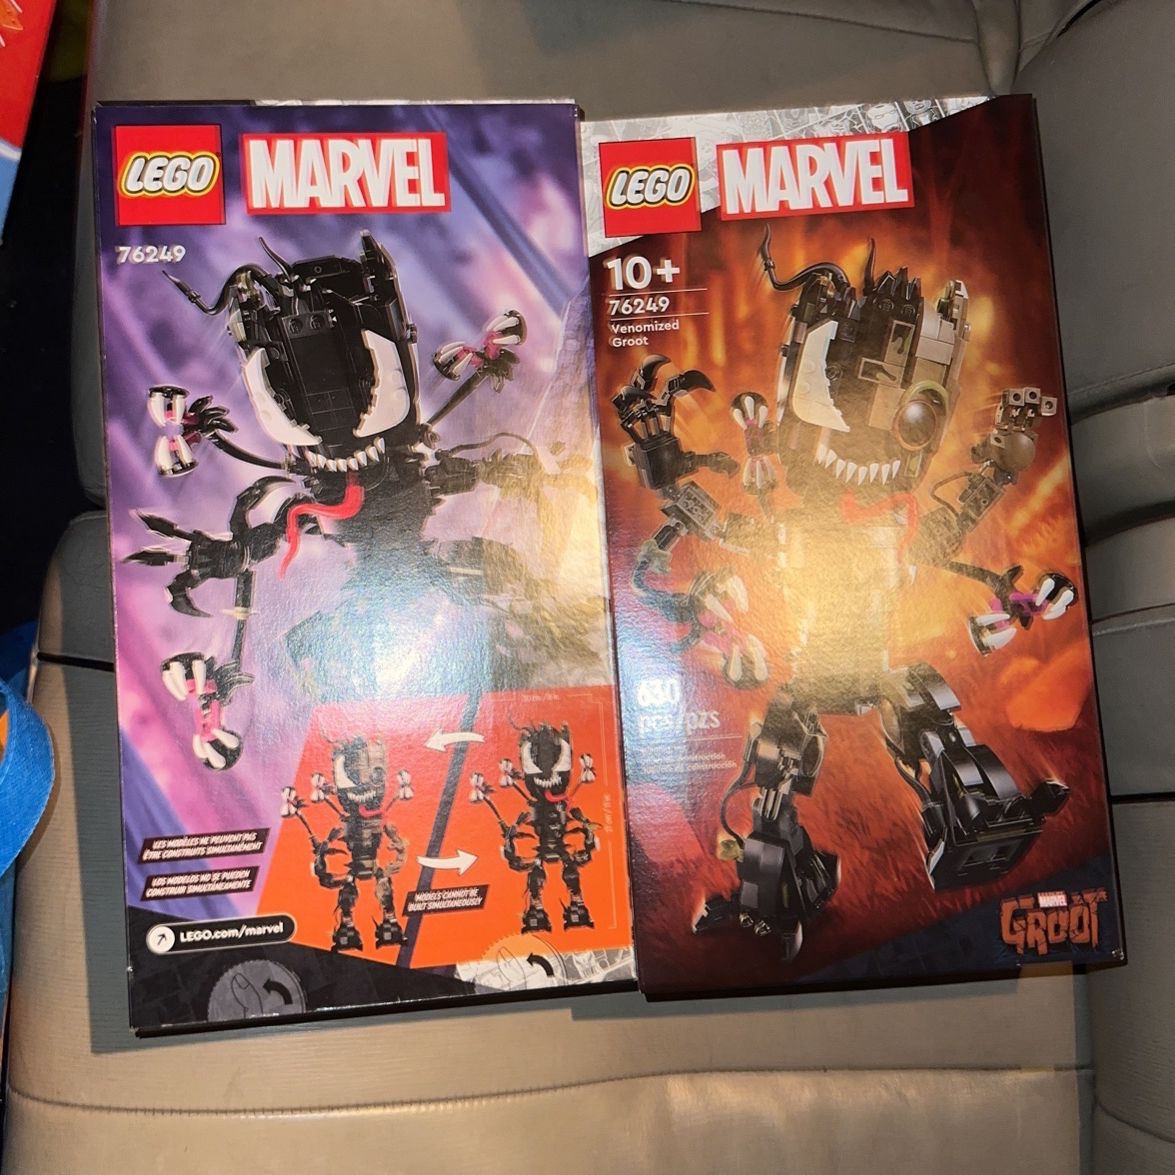 LEGO Marvel 76249 Vemonized Groot Set